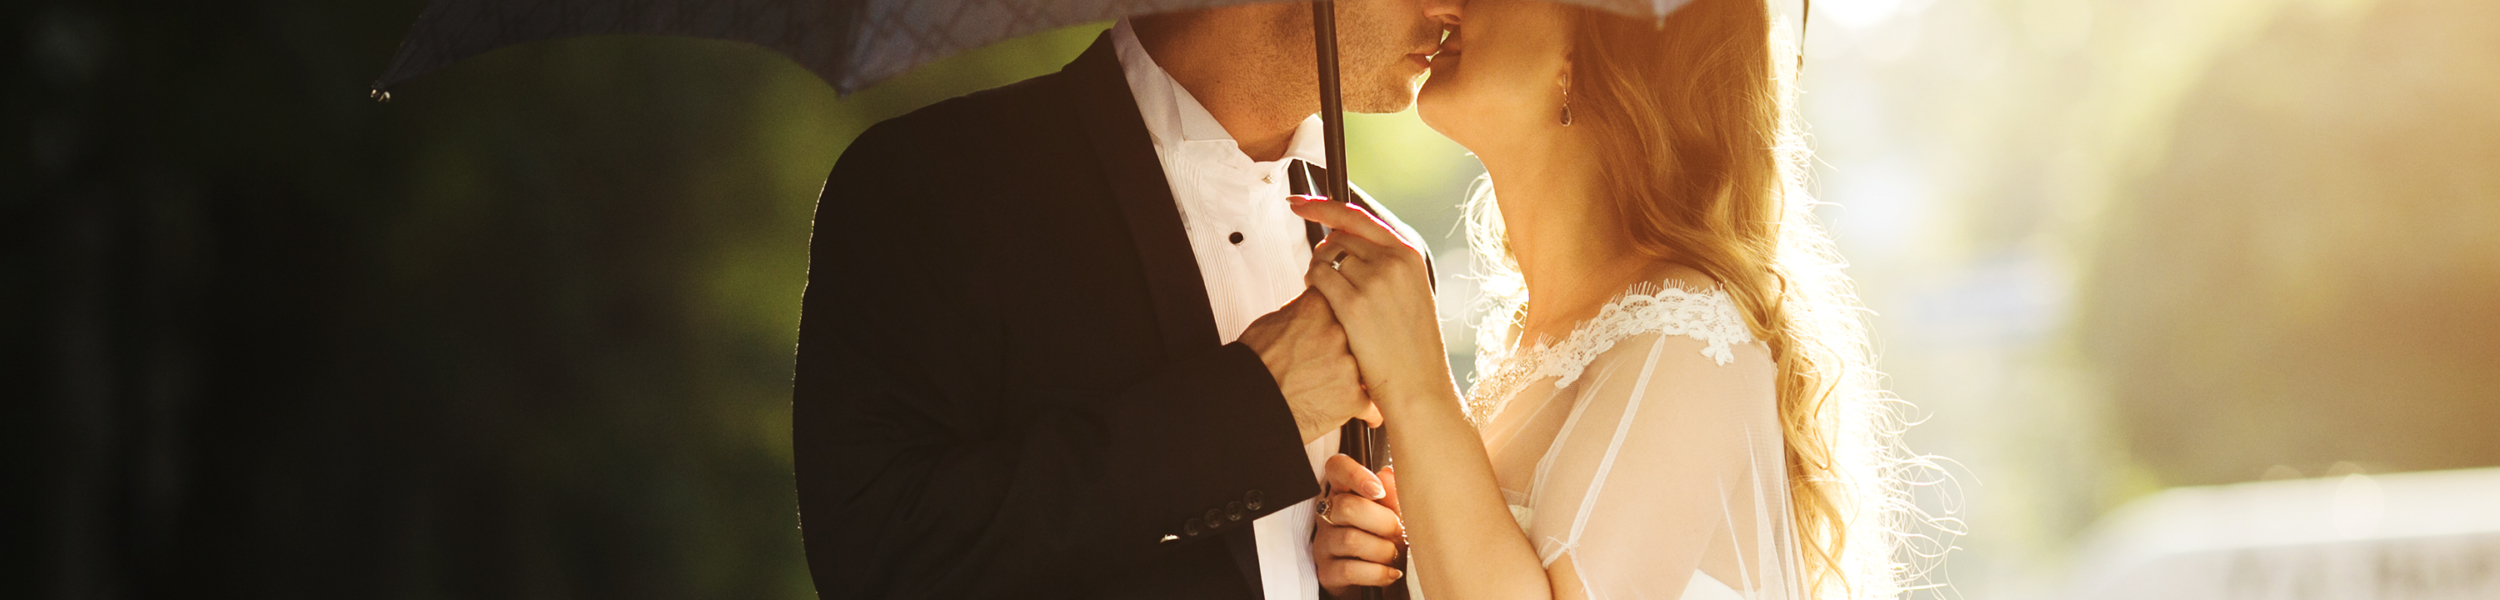 Wedding couple kissing on umbrella